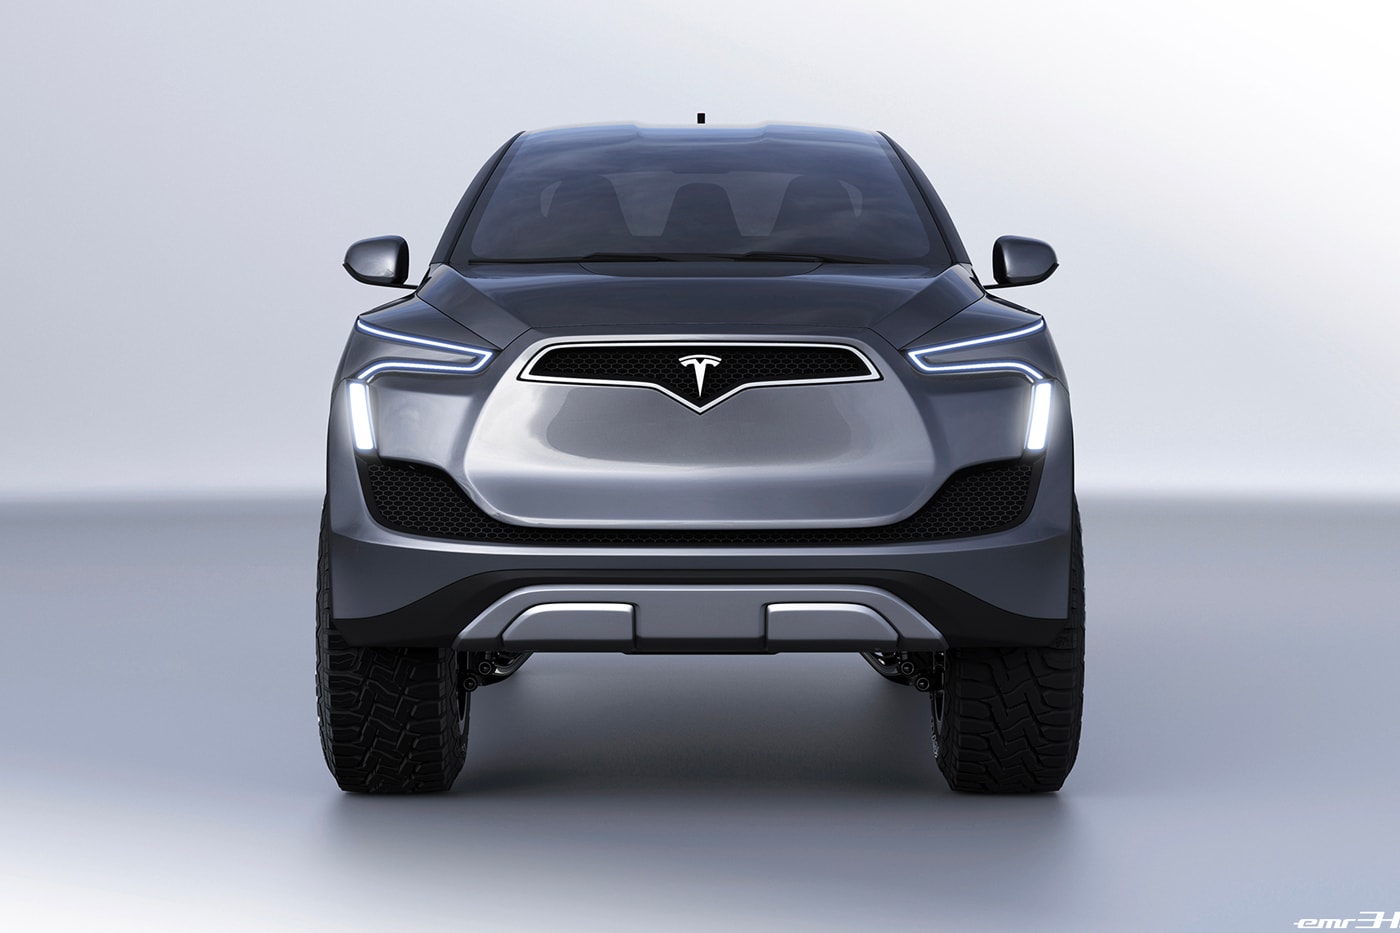 Emre Husmen Tesla Pickup Truck Concept electric vehicle EV cars automobiles 